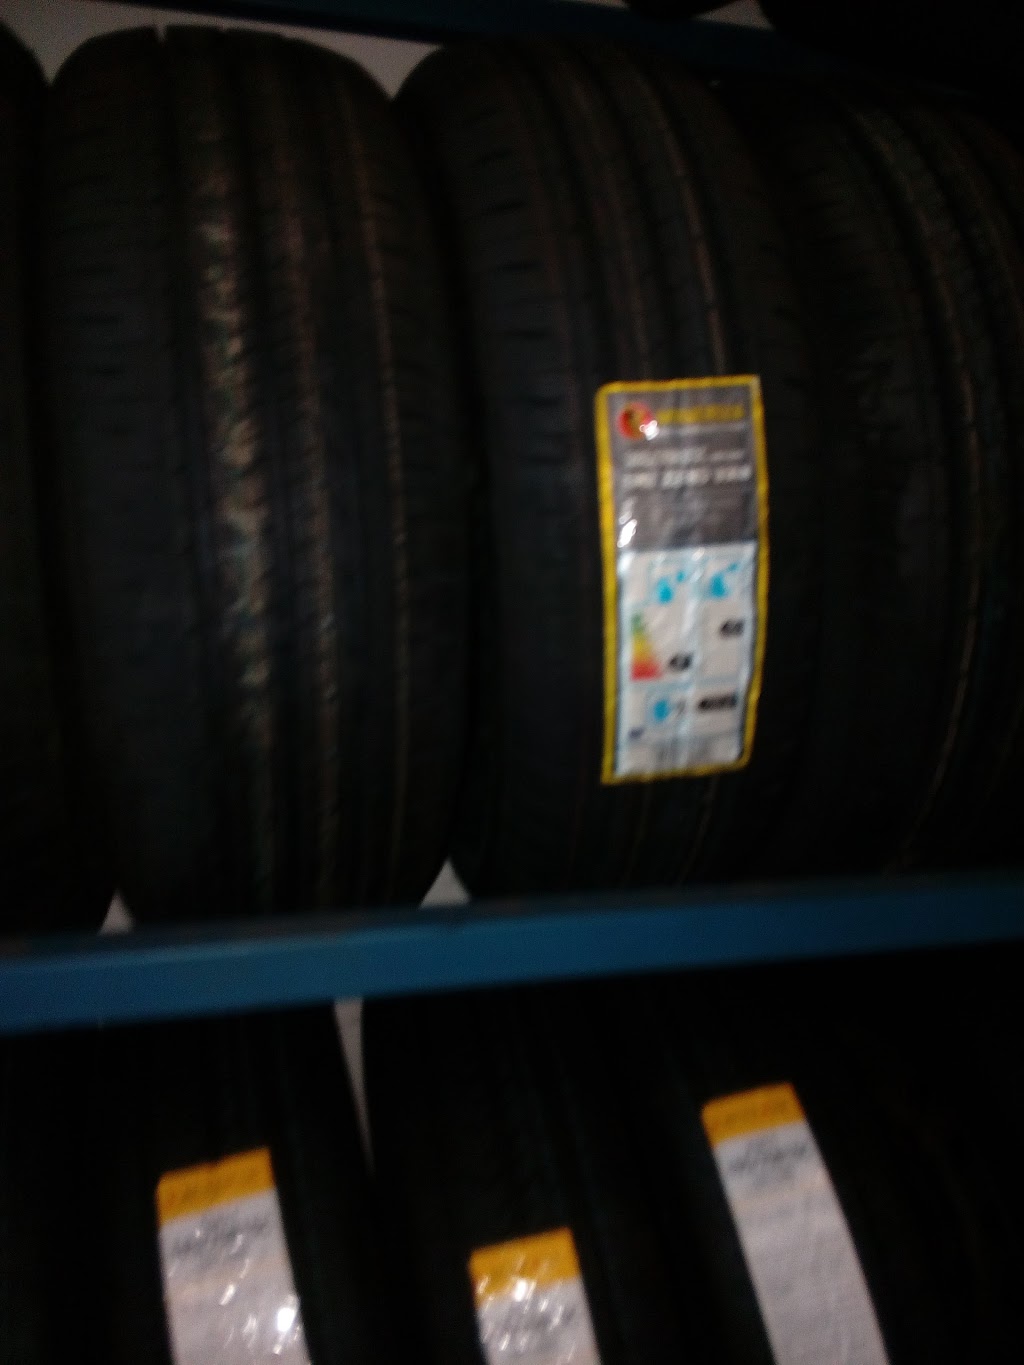 Happy Tyres | car repair | 1/3337 Pacific Hwy, Slacks Creek QLD 4127, Australia | 0732992345 OR +61 7 3299 2345